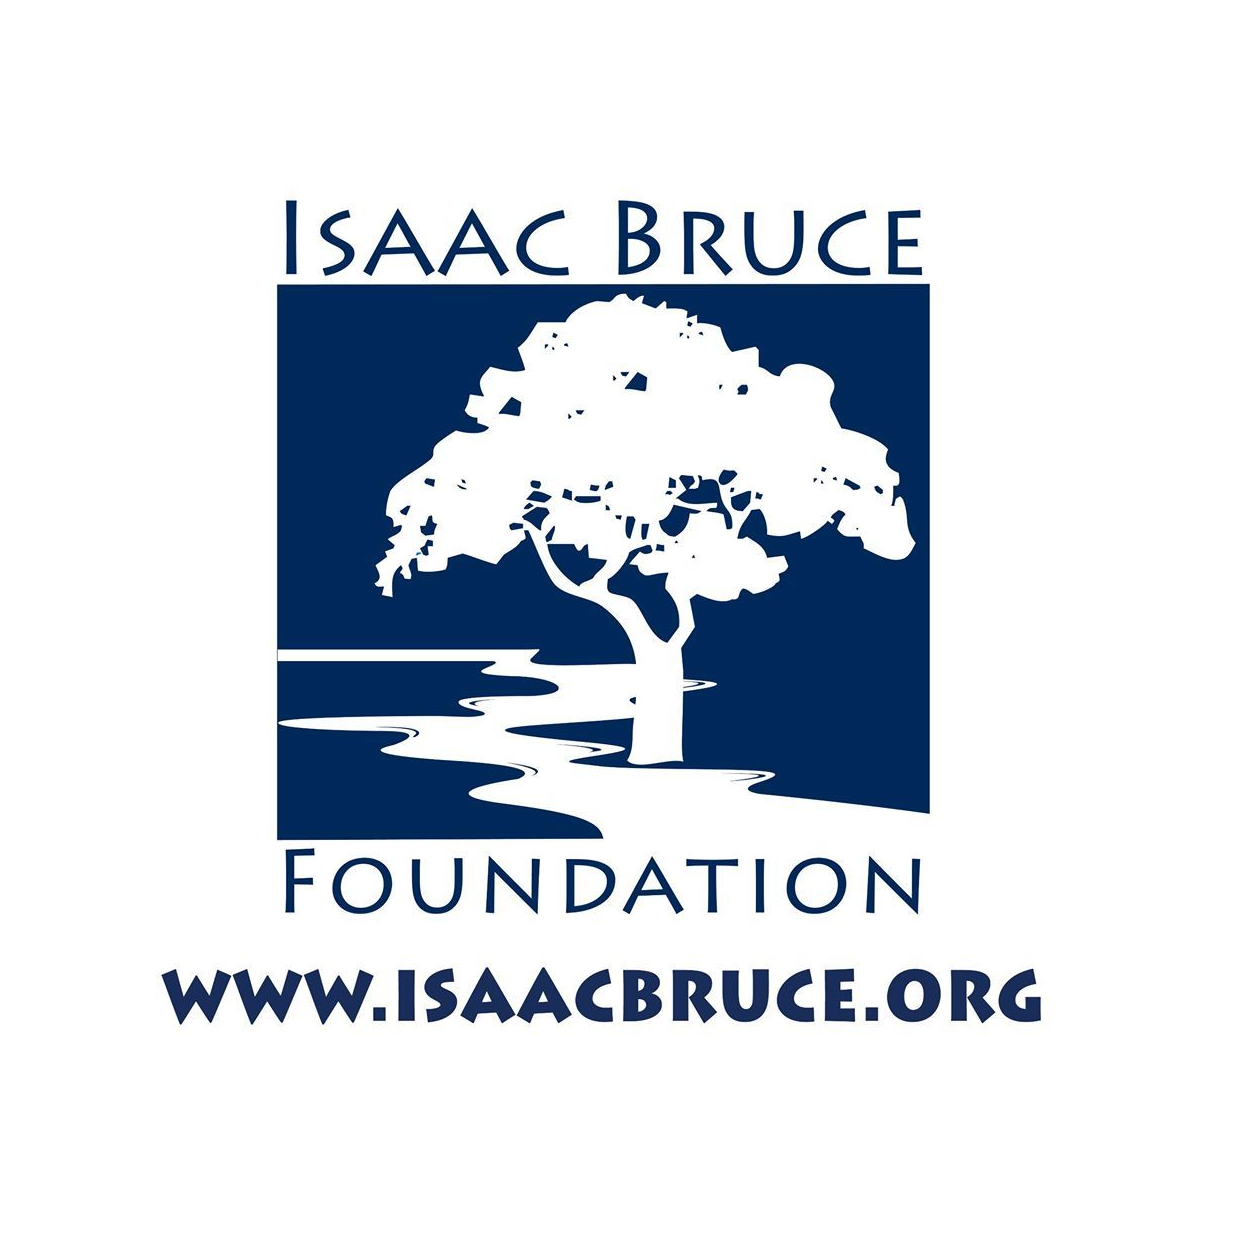 Isaac Bruce Foundation